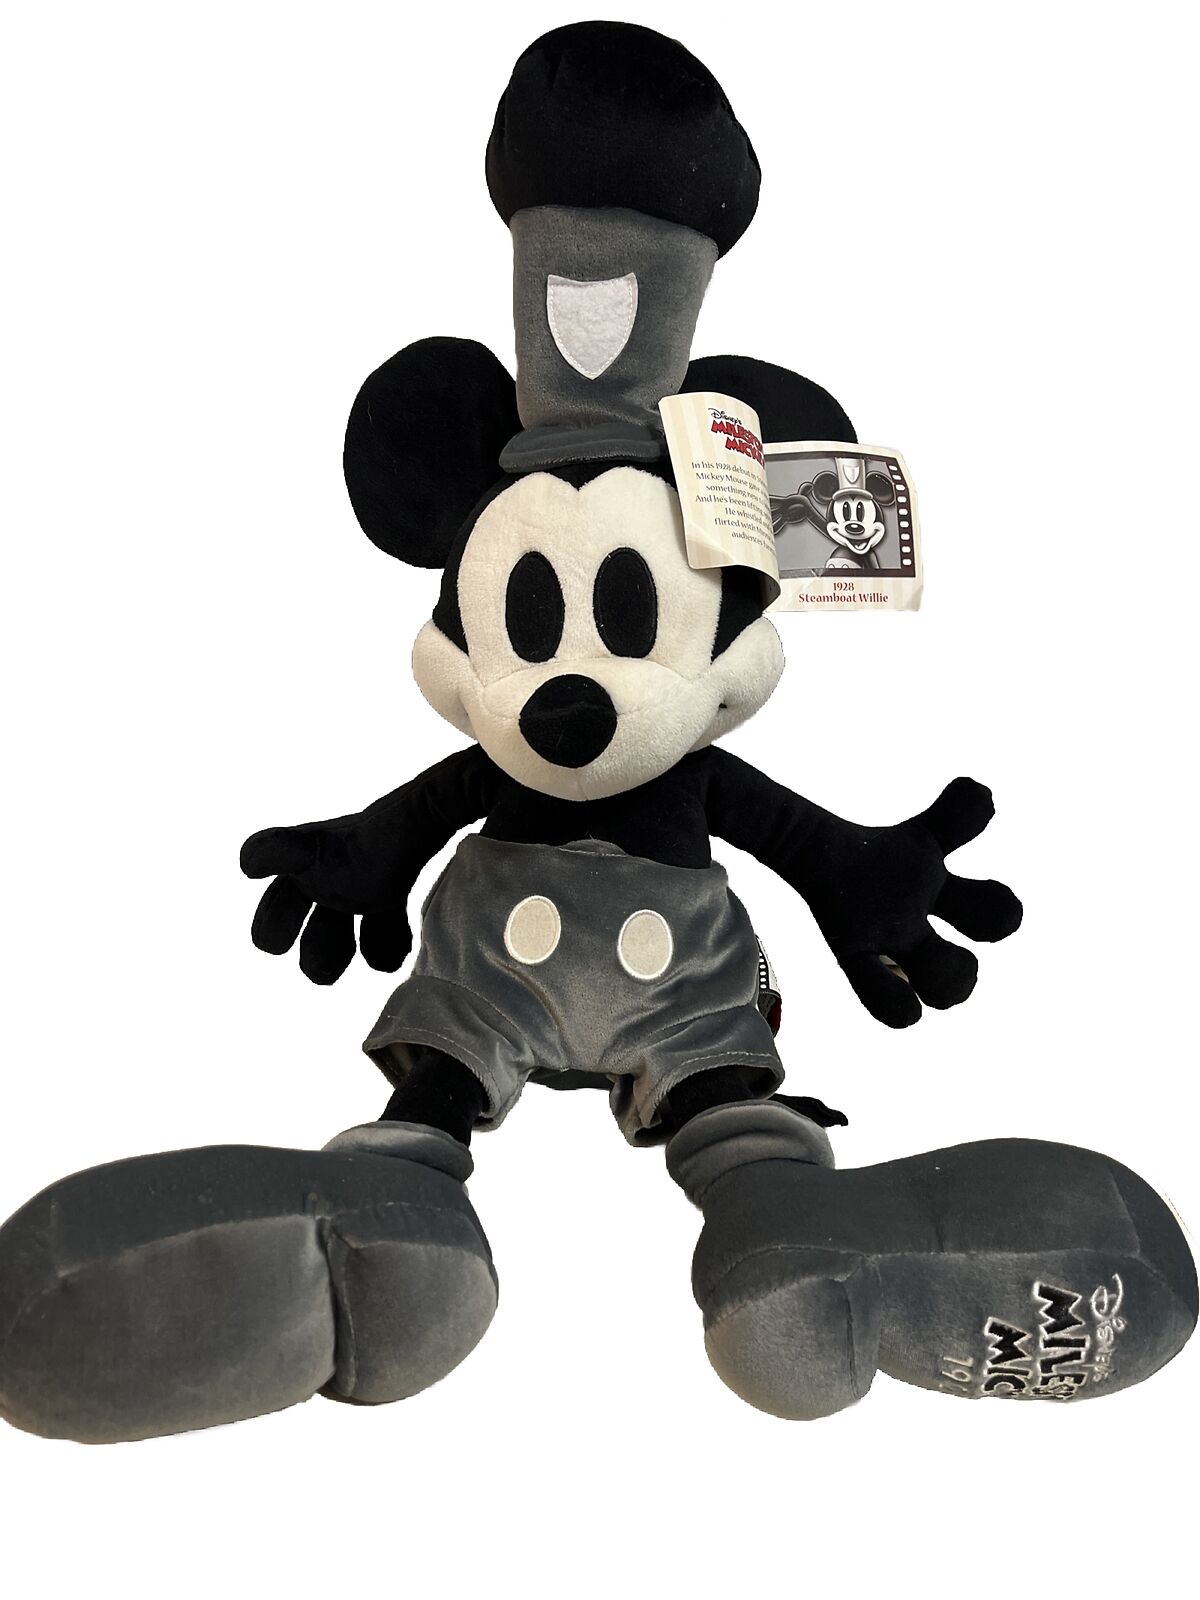 Disney Store Limited Edition Milestone Mickey 1928 Steamboat Willie 26” Plush